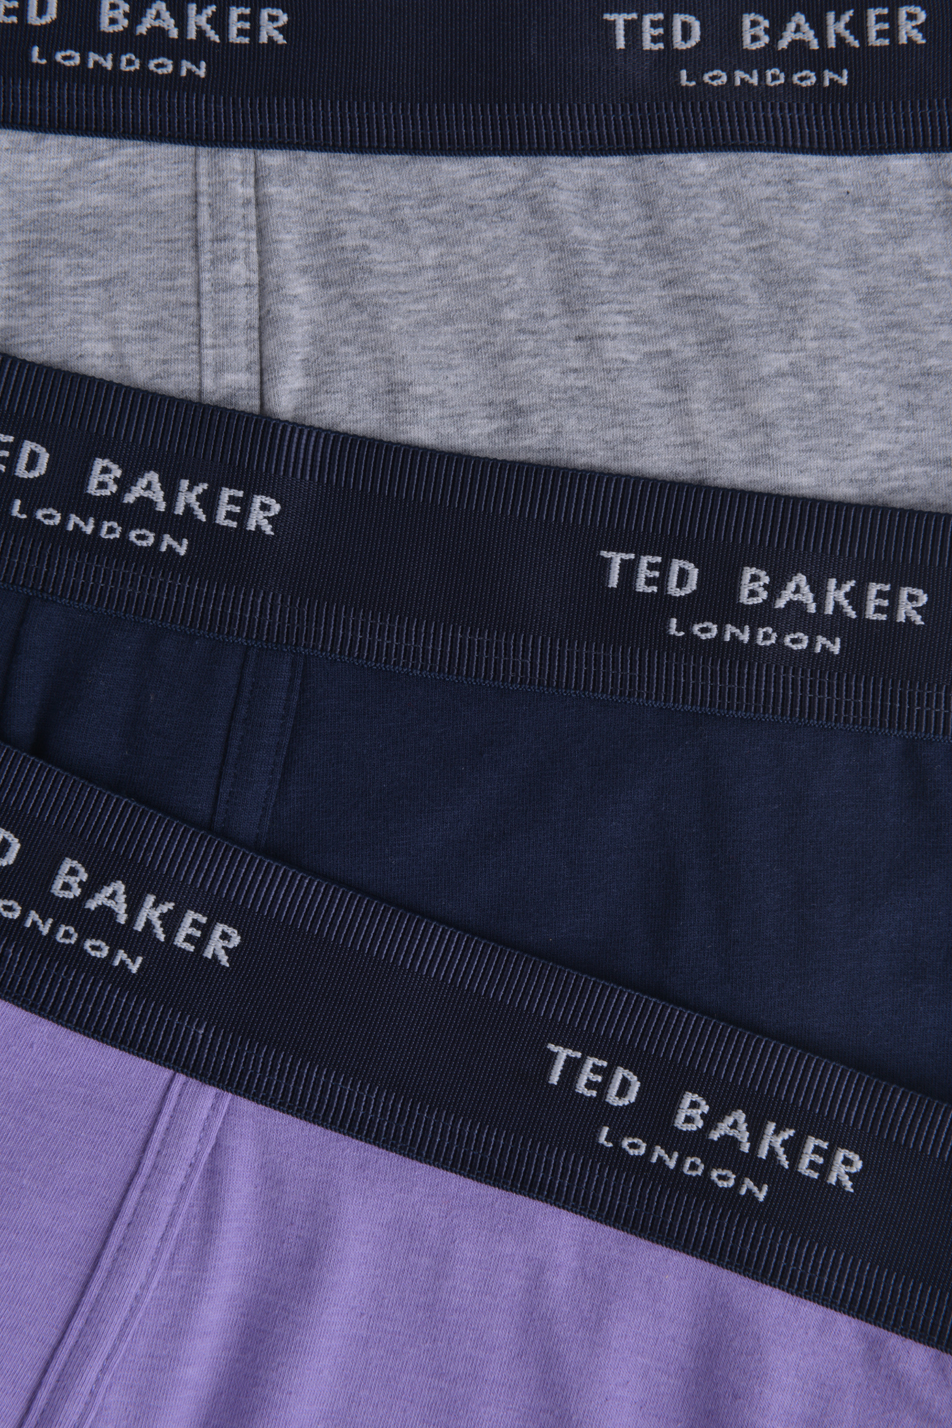 Ted Baker 3 Pack Men's Cotton Trunk